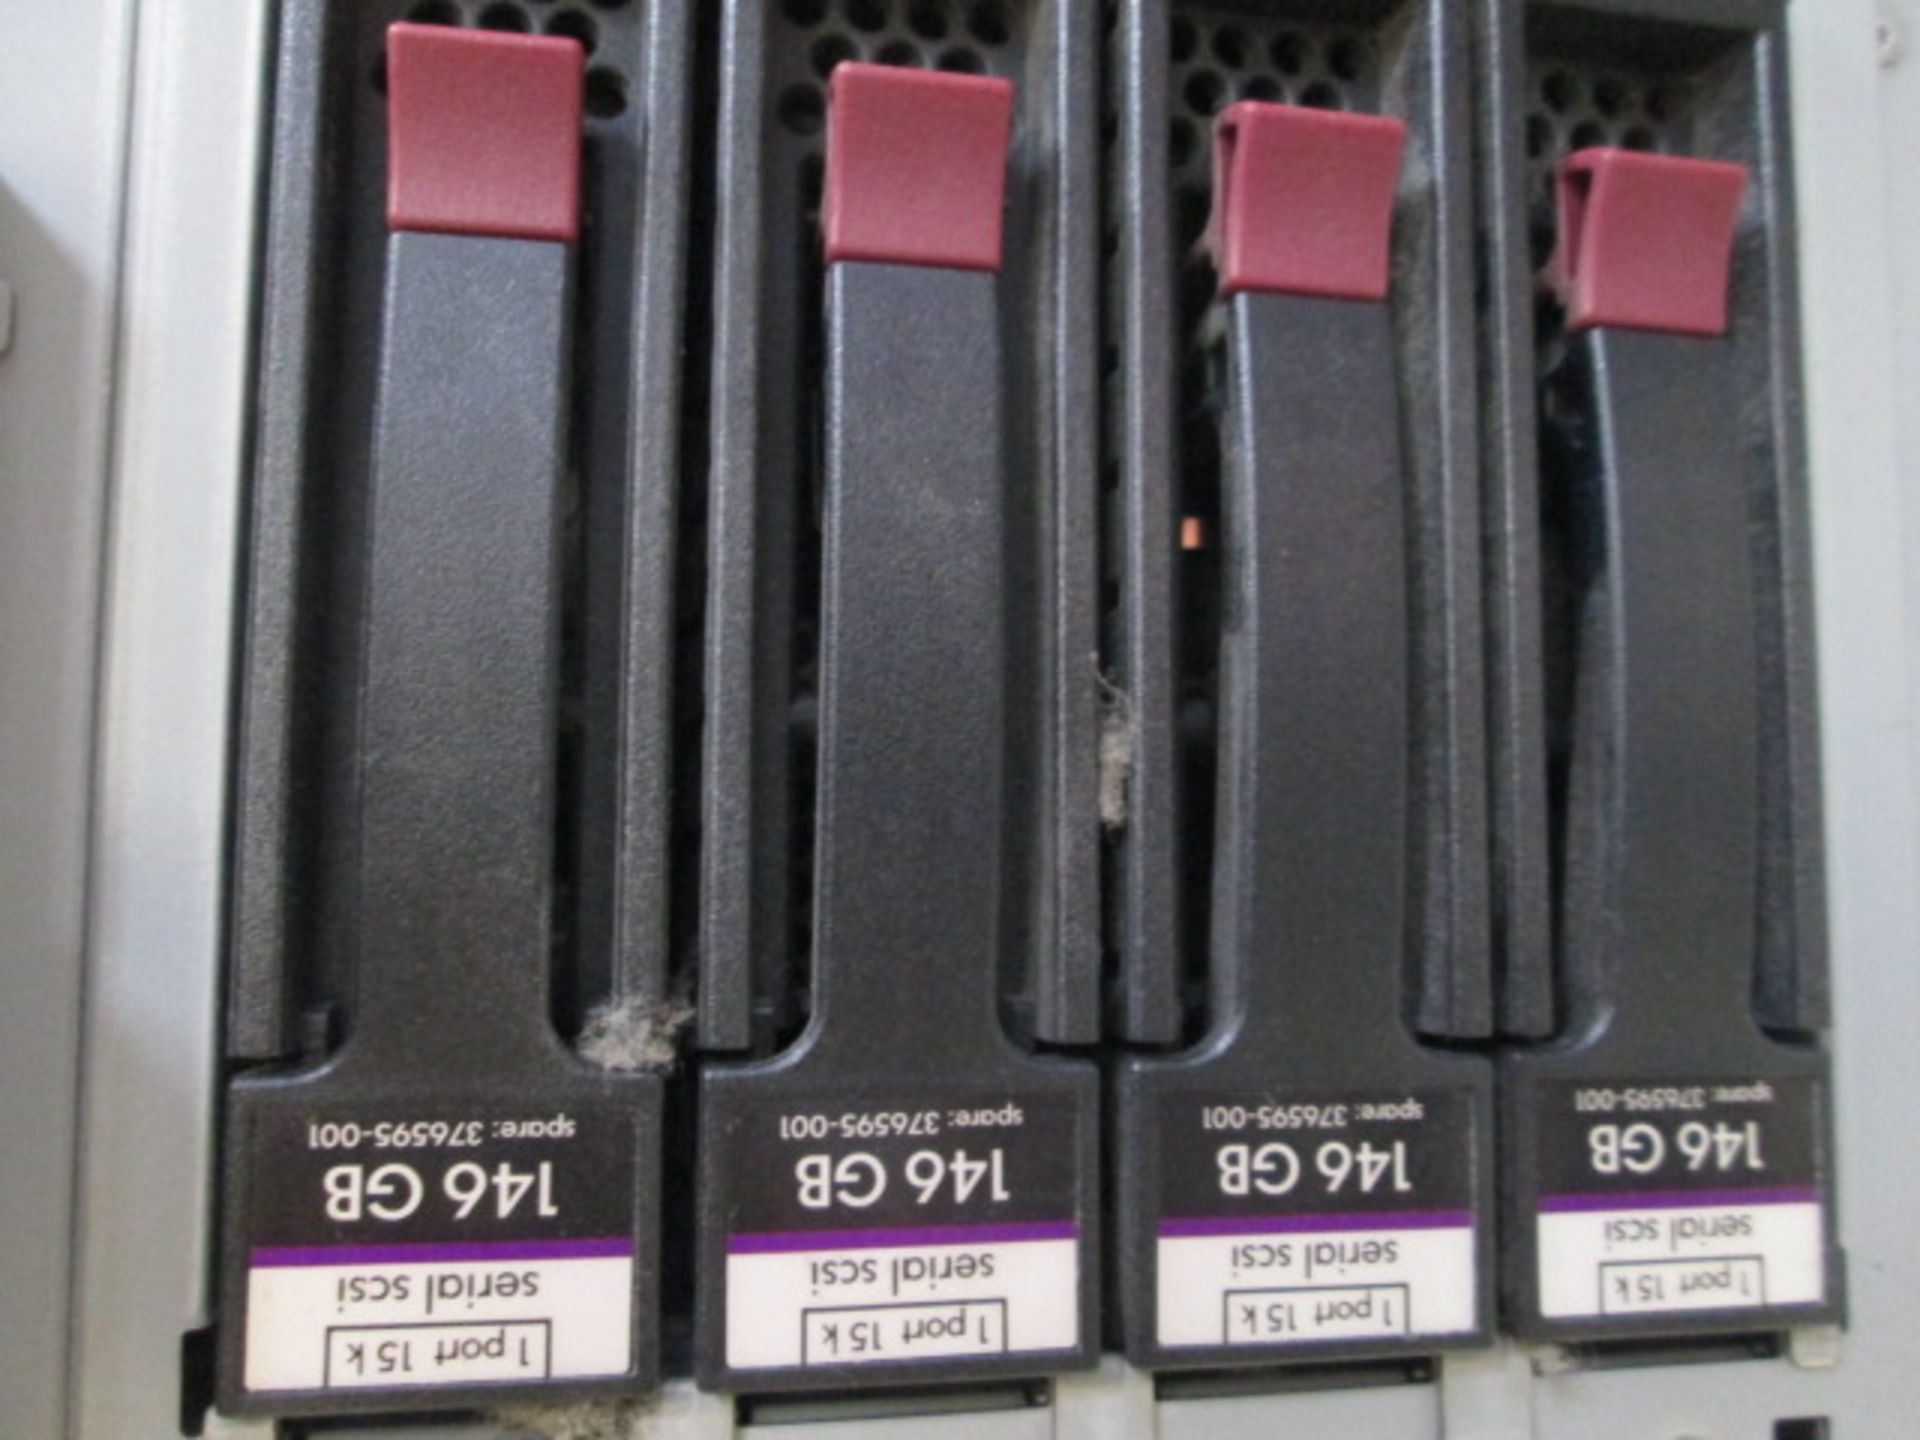 HP Proliant ML310 G4 Tower Server. 2 x Intel Xeon 3050 CPU @ 2.13GHz, 2GB RAM. - Image 5 of 6